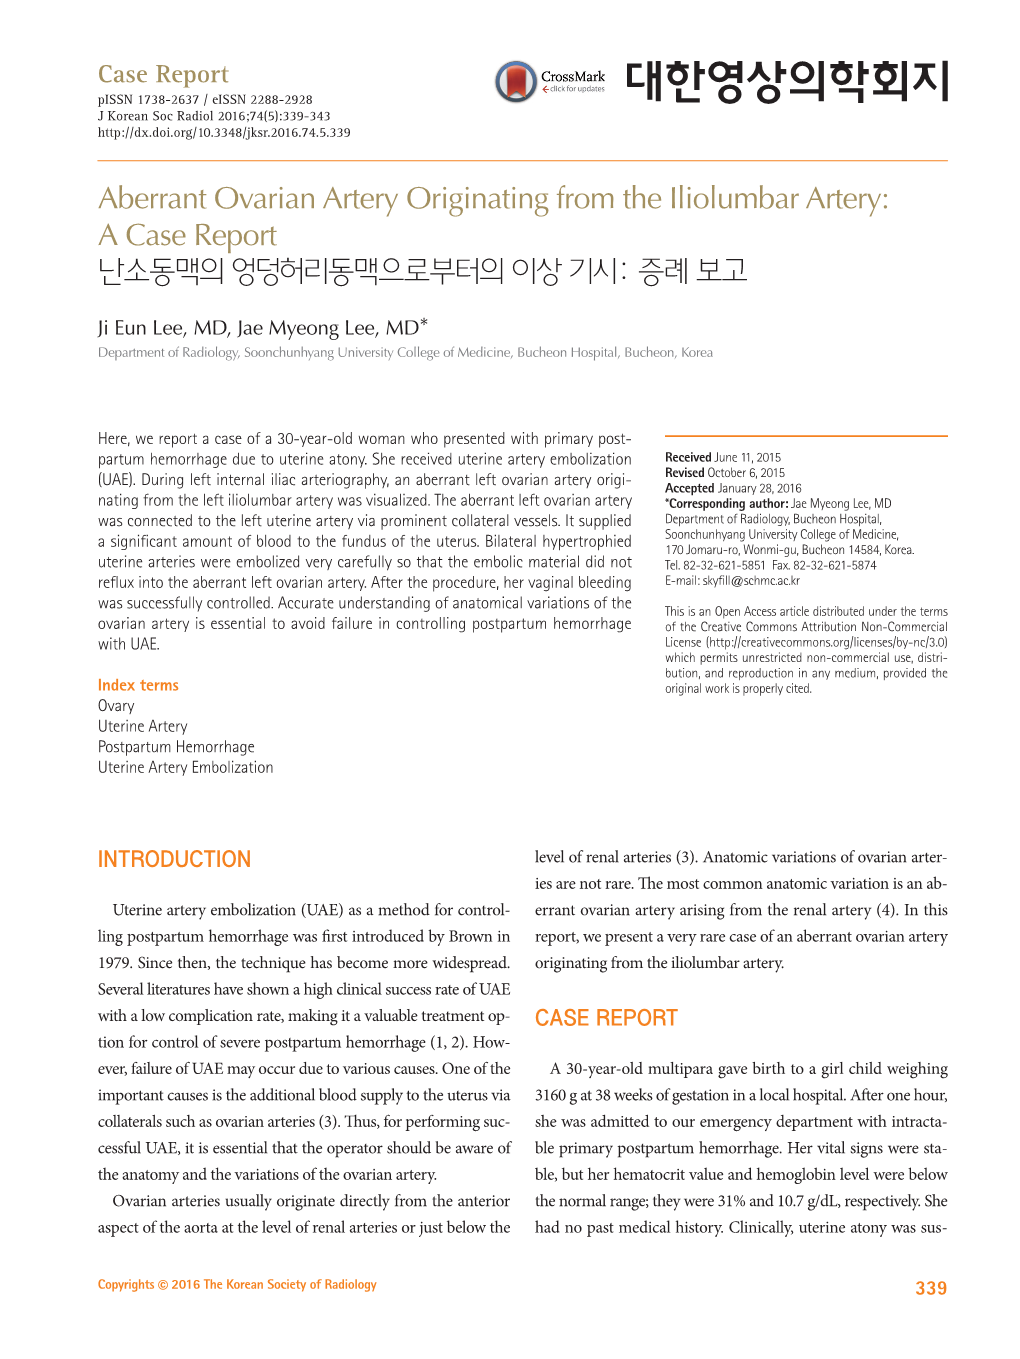 Aberrant Ovarian Artery Originating from the Iliolumbar Artery: a Case Report 난소동맥의 엉덩허리동맥으로부터의 이상 기시: 증례 보고